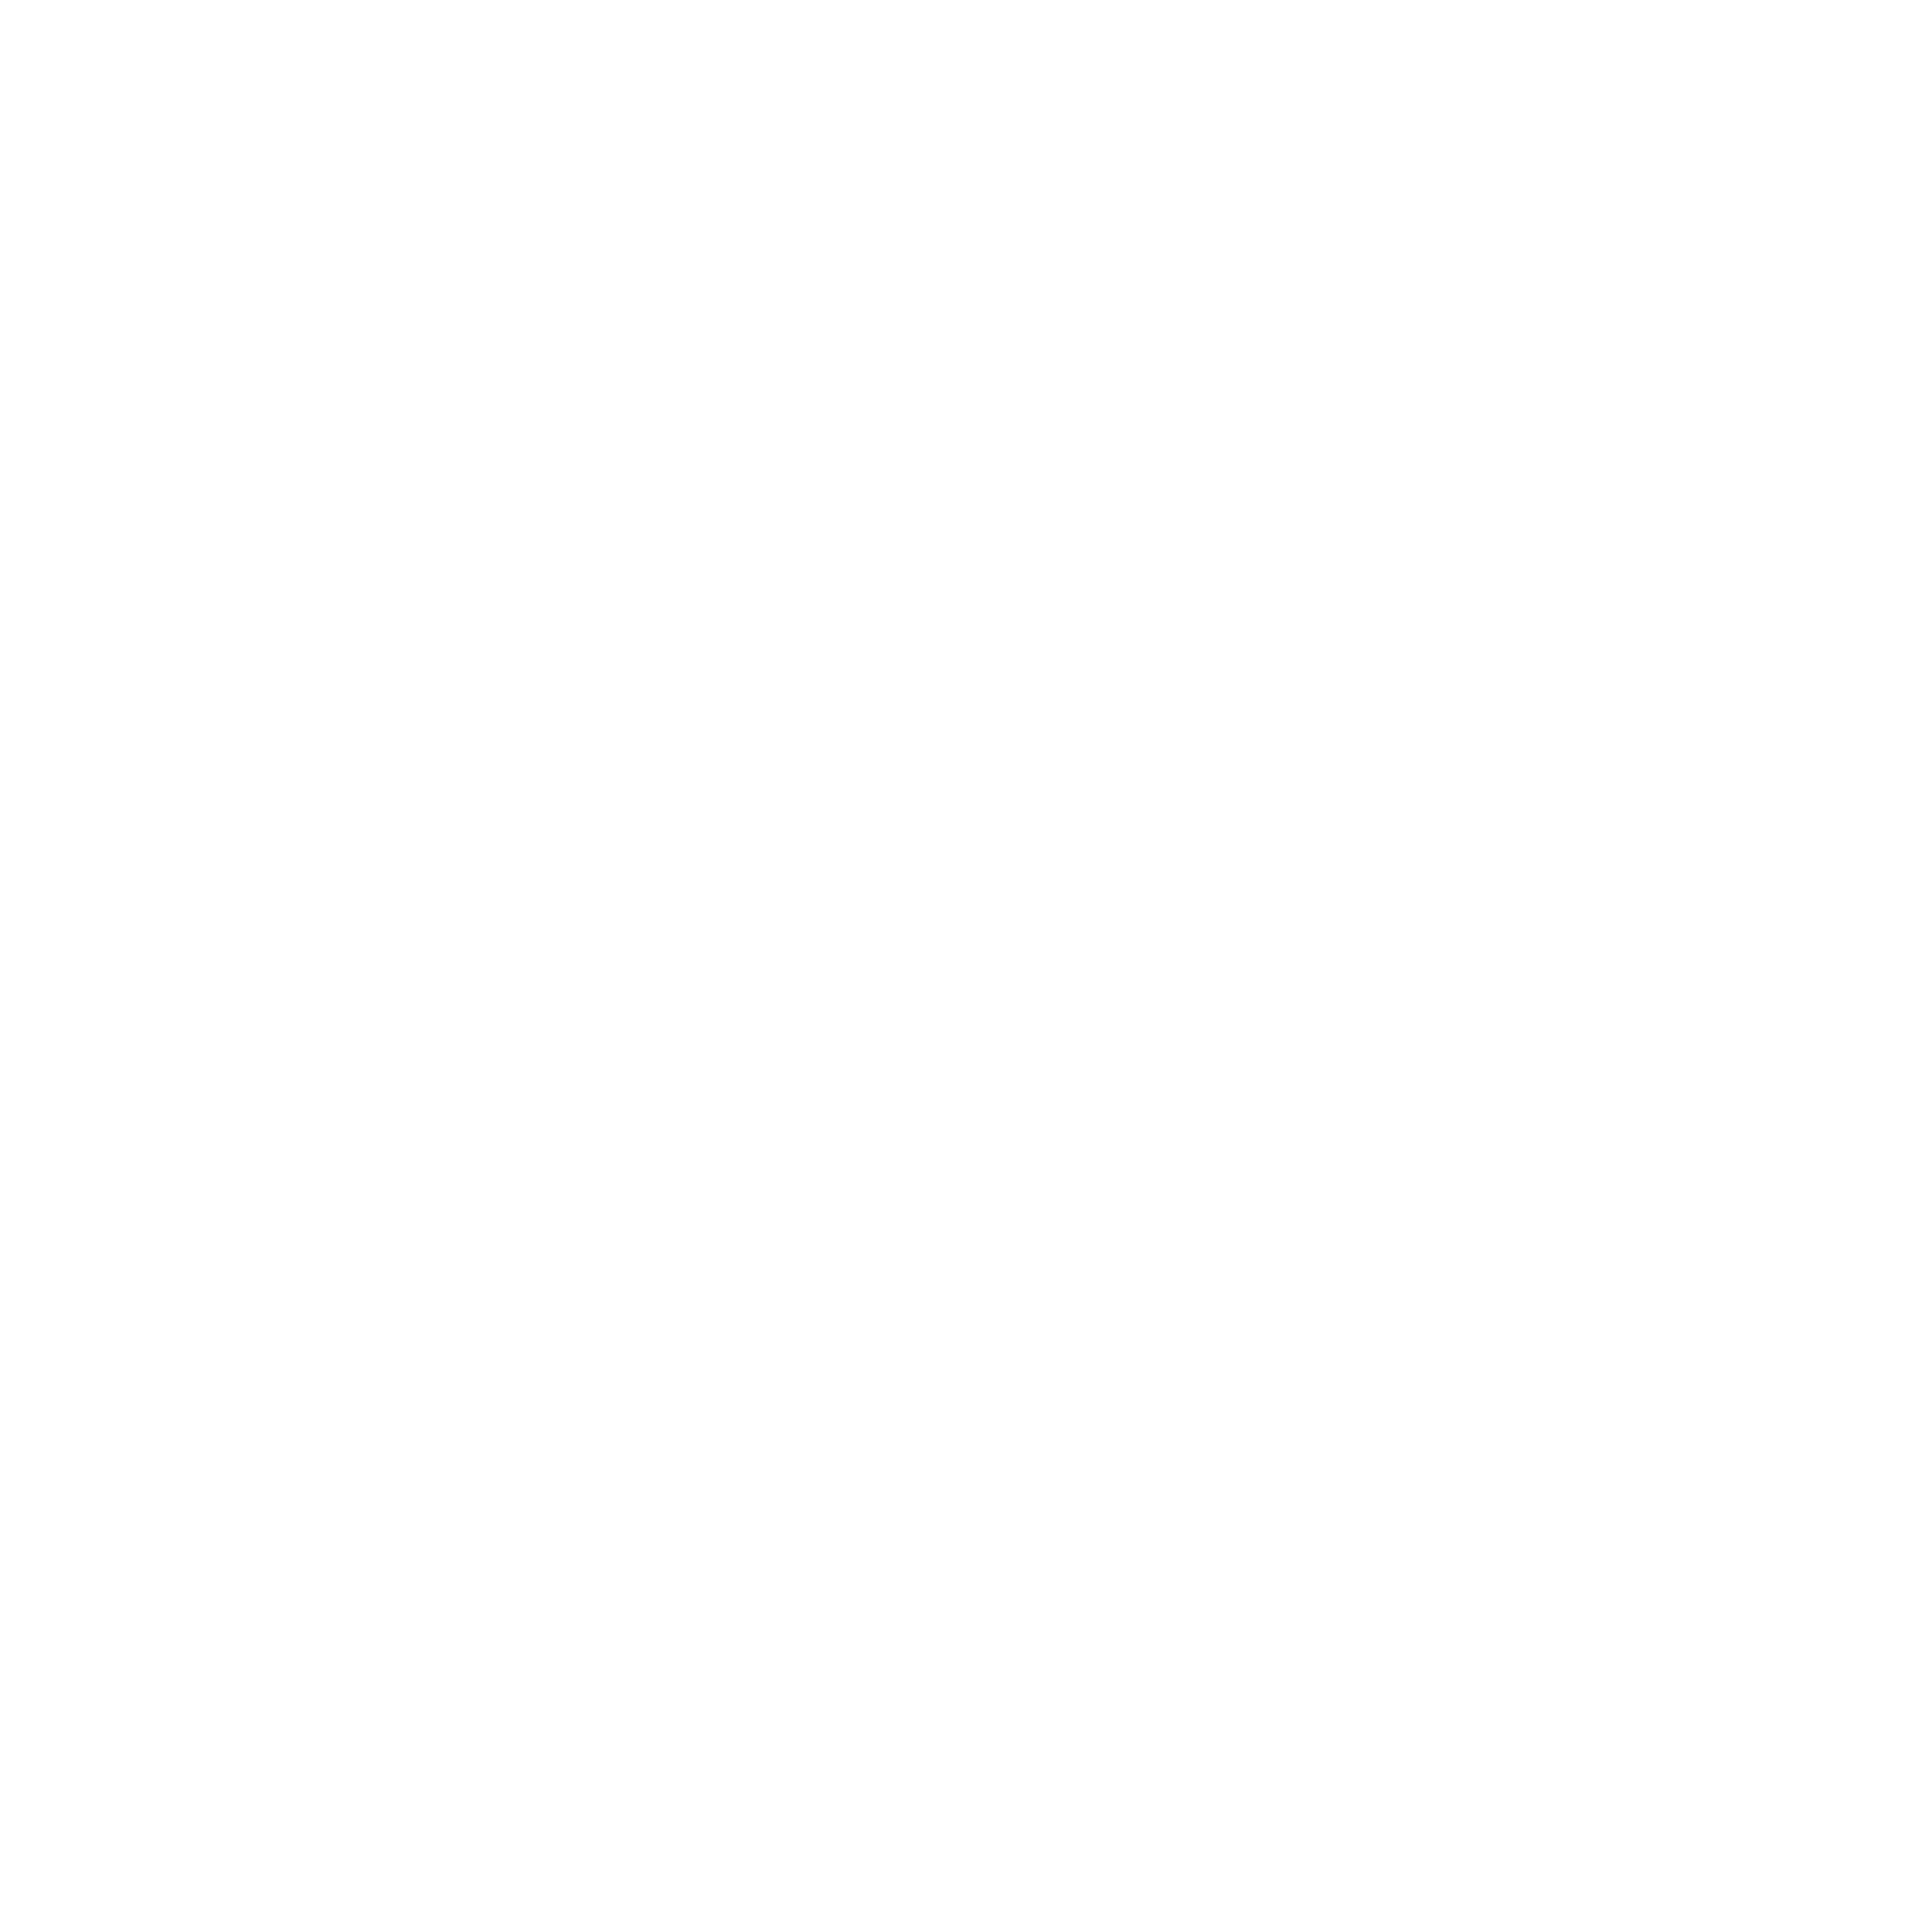 Image result for equal housing logo